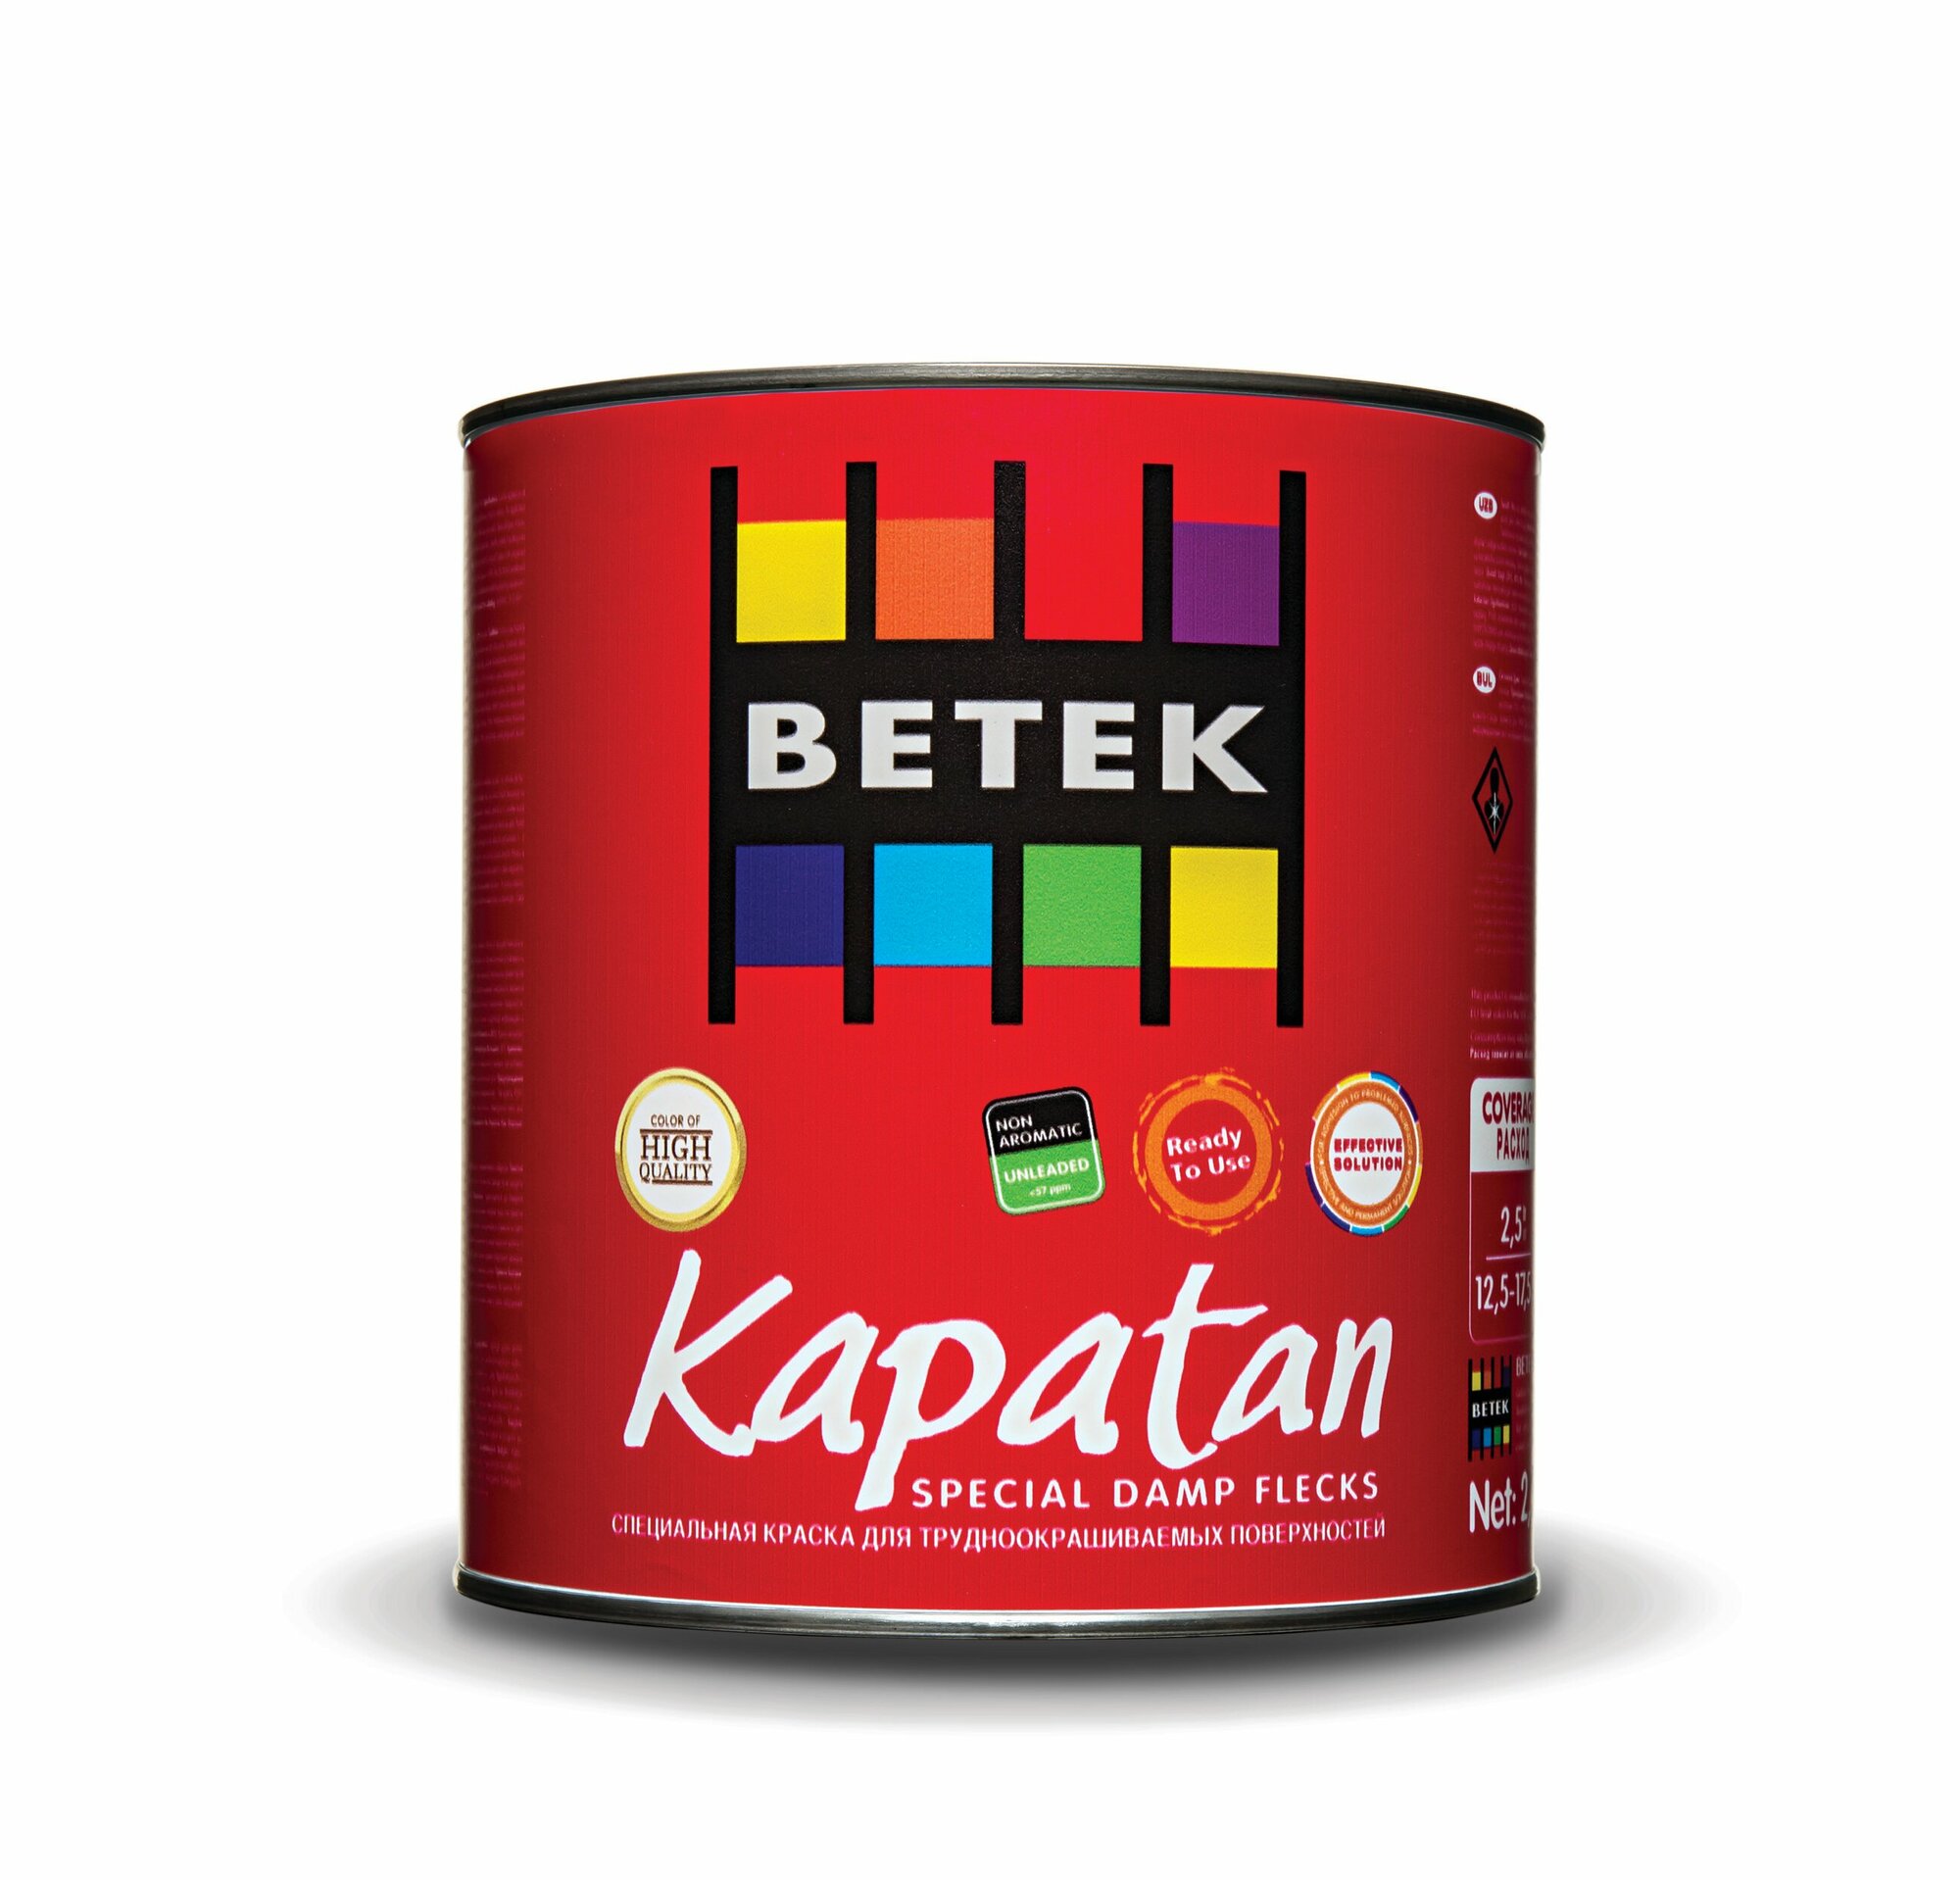 Грунтовочная изолирующая краска Betek Kapatan, 075л